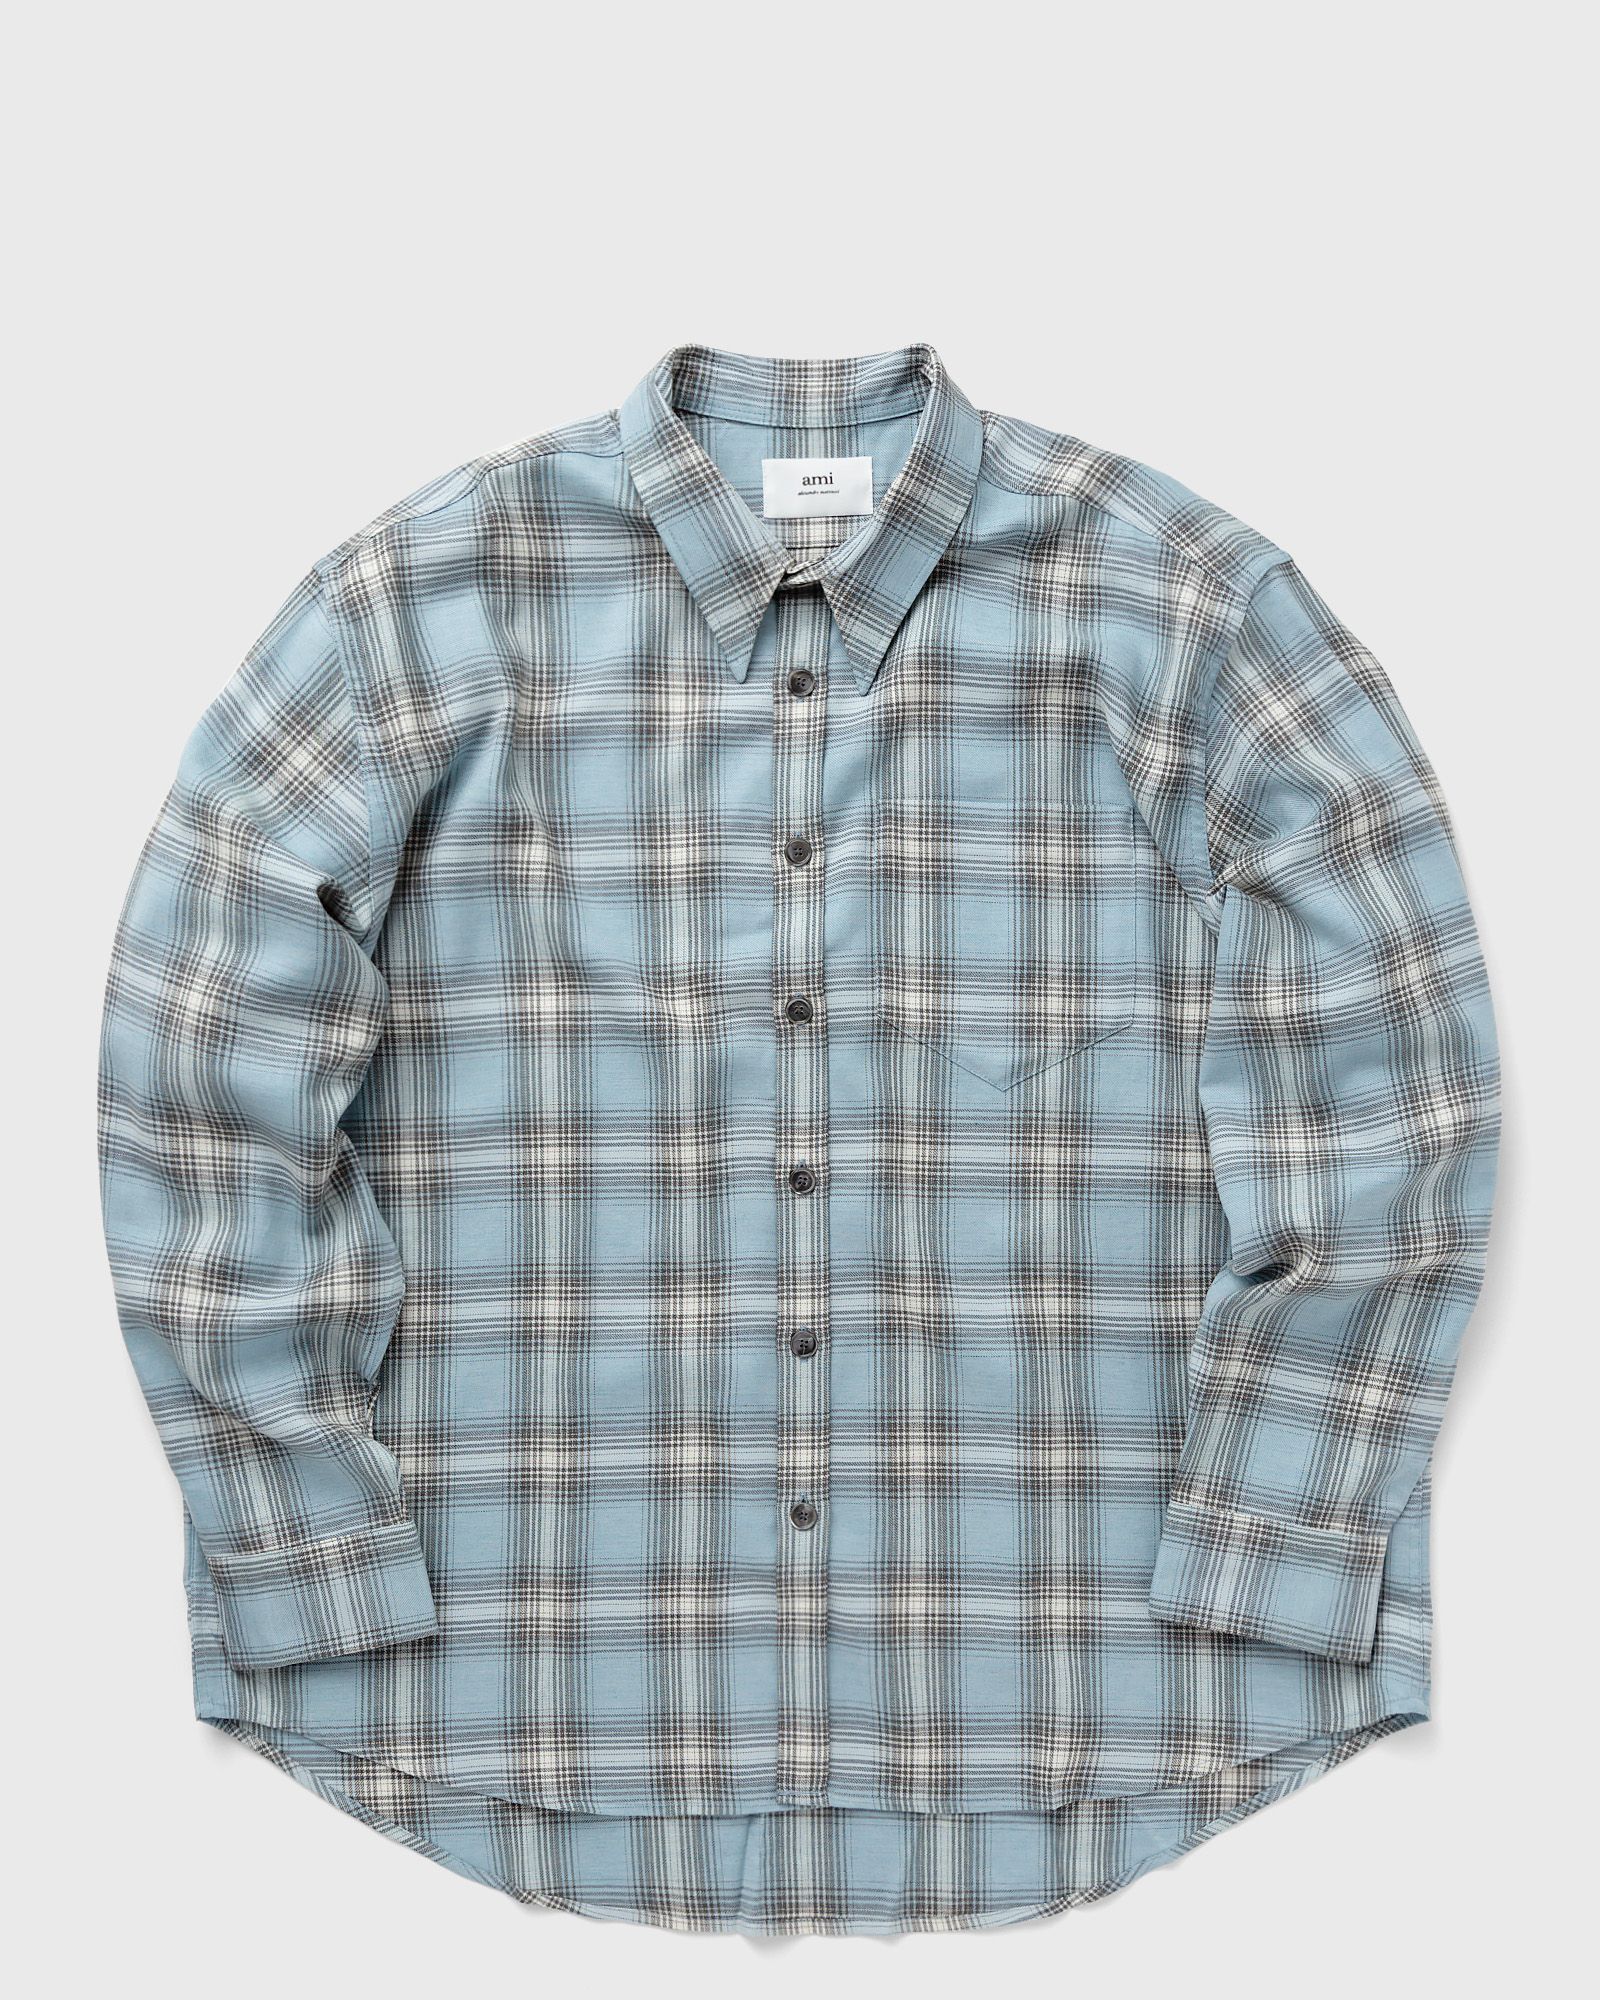 AMI Paris - oversize overshirt with patch pocket men longsleeves blue in größe:xl